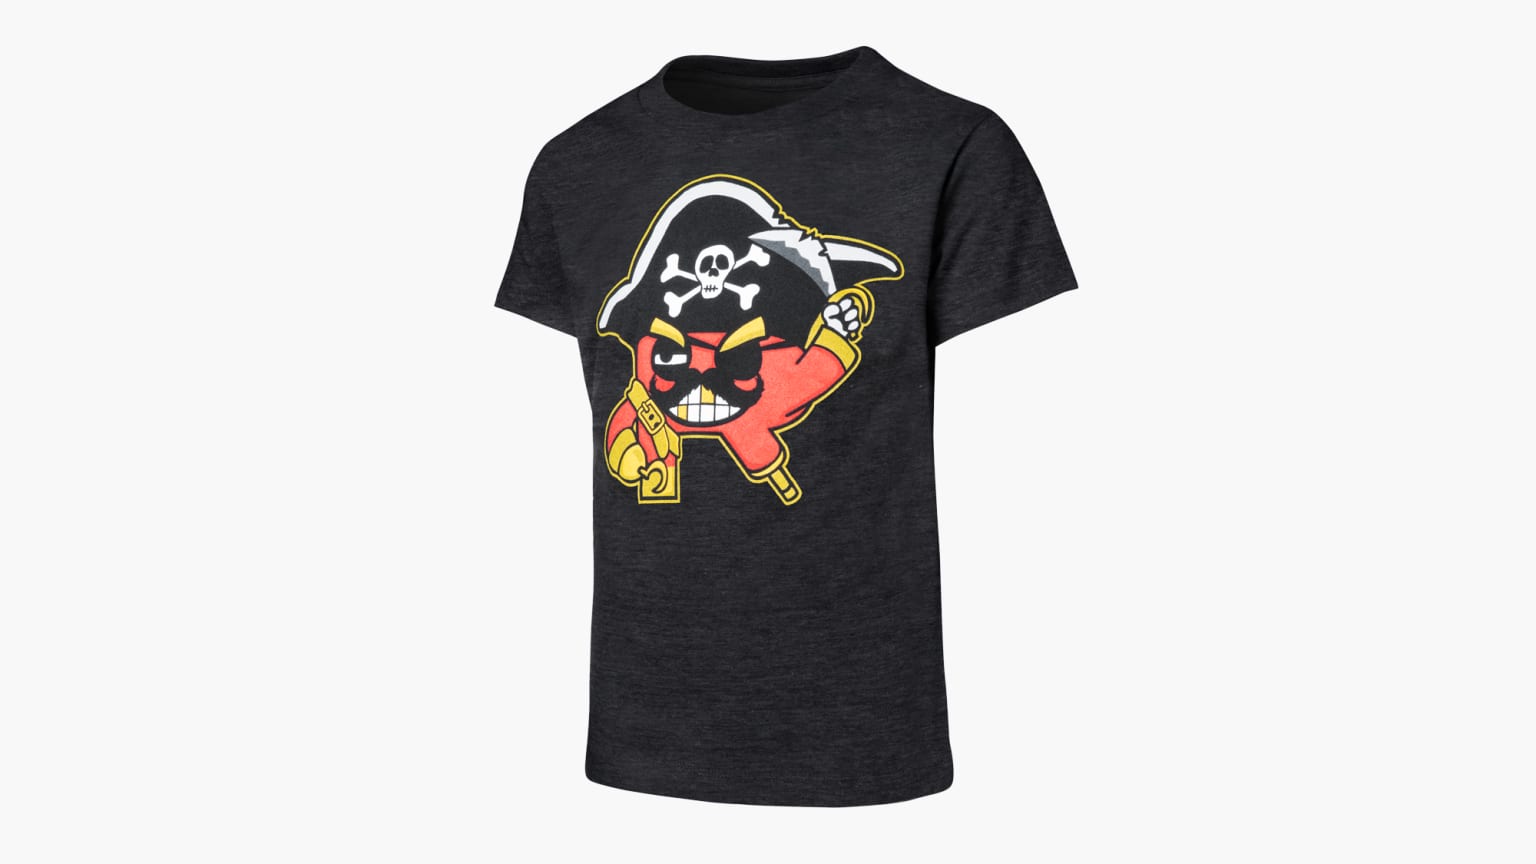 Rogue Pirate Kids' Shirt - Kids 4 - Black